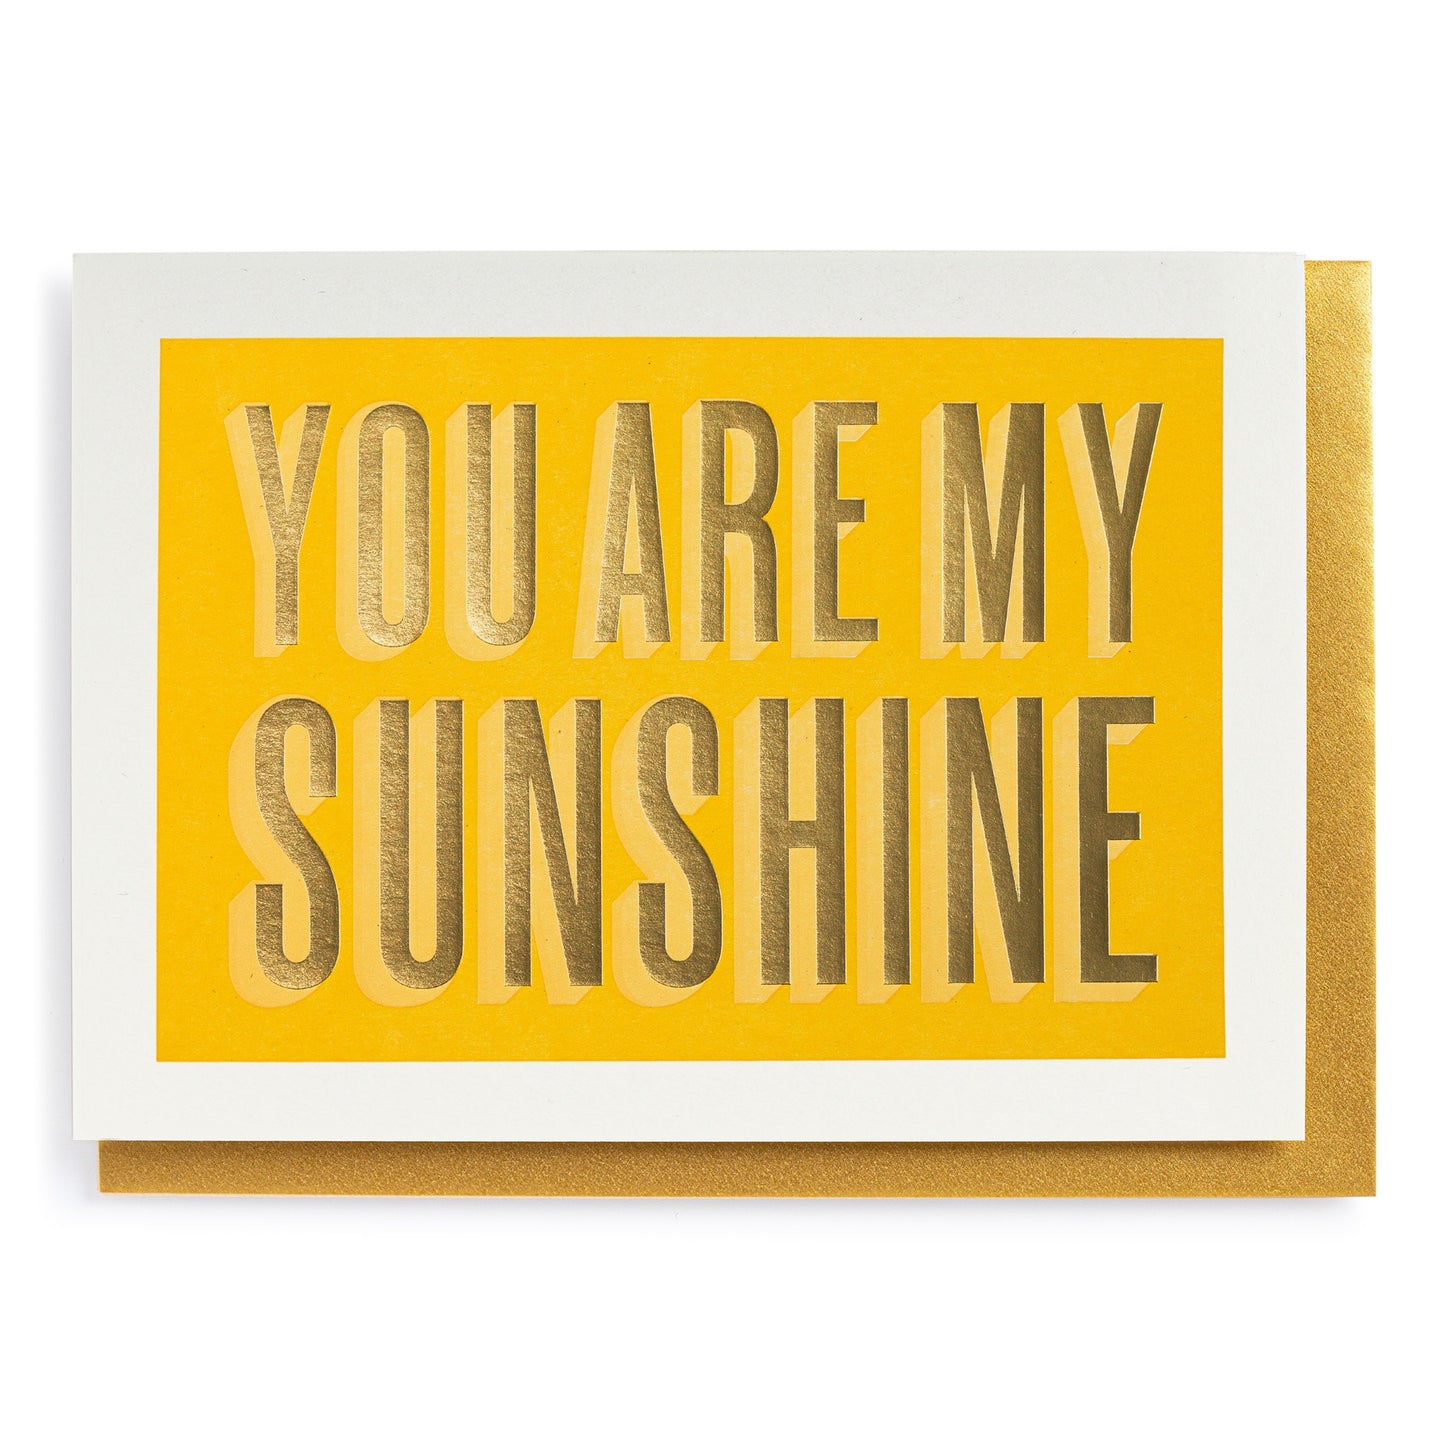 You are my Sunshine Card